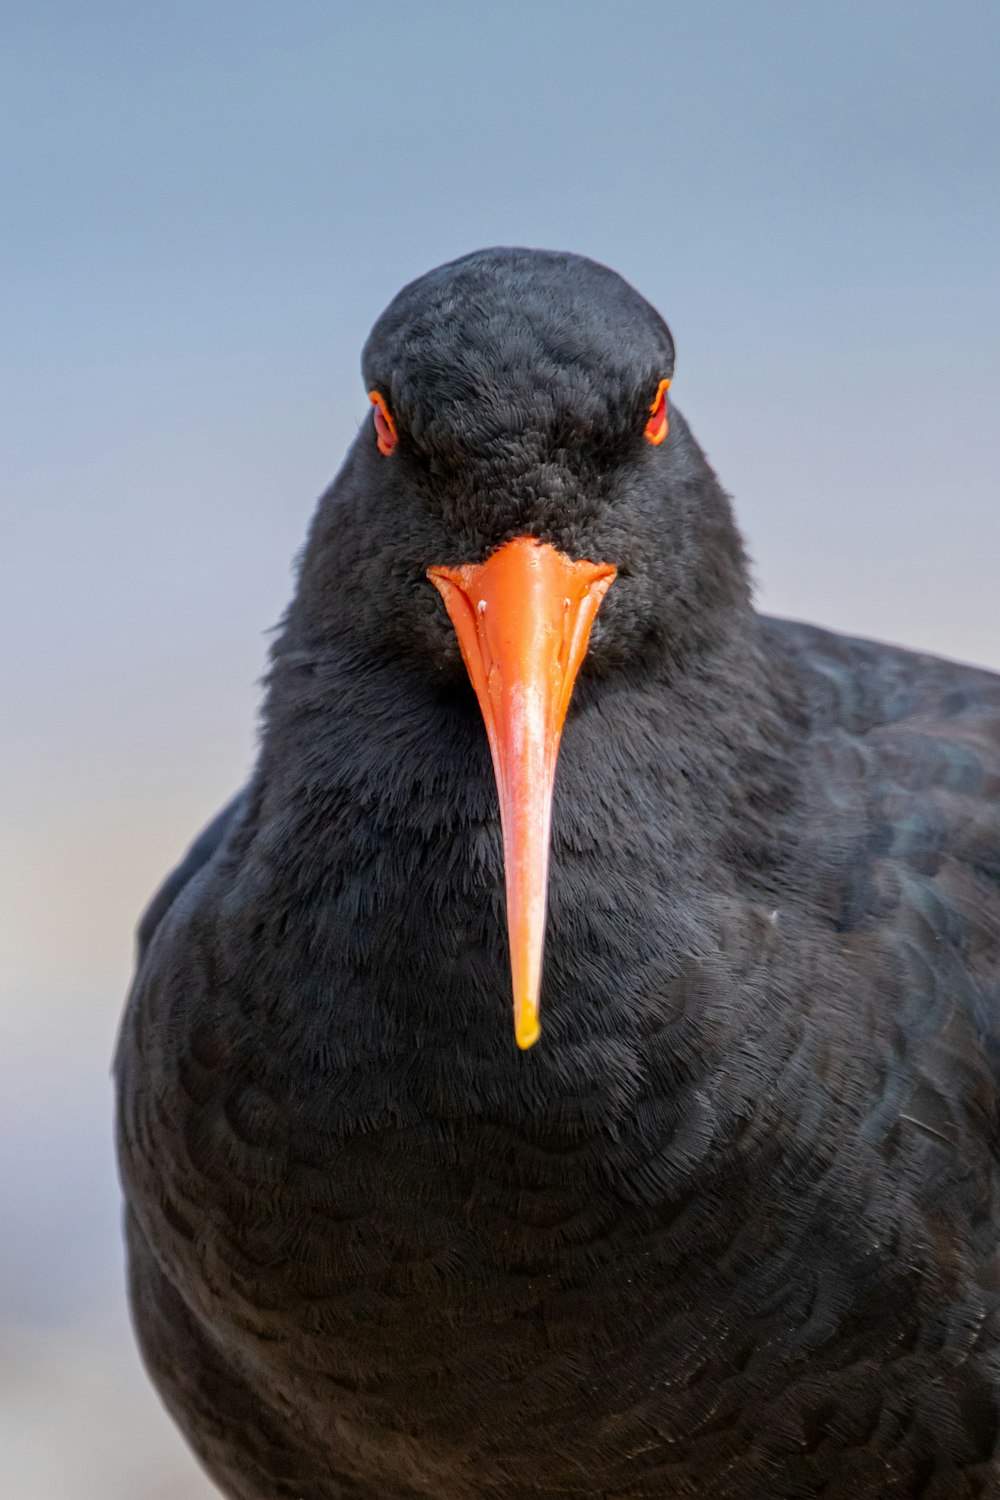 a close up of a black bird with an orange beak